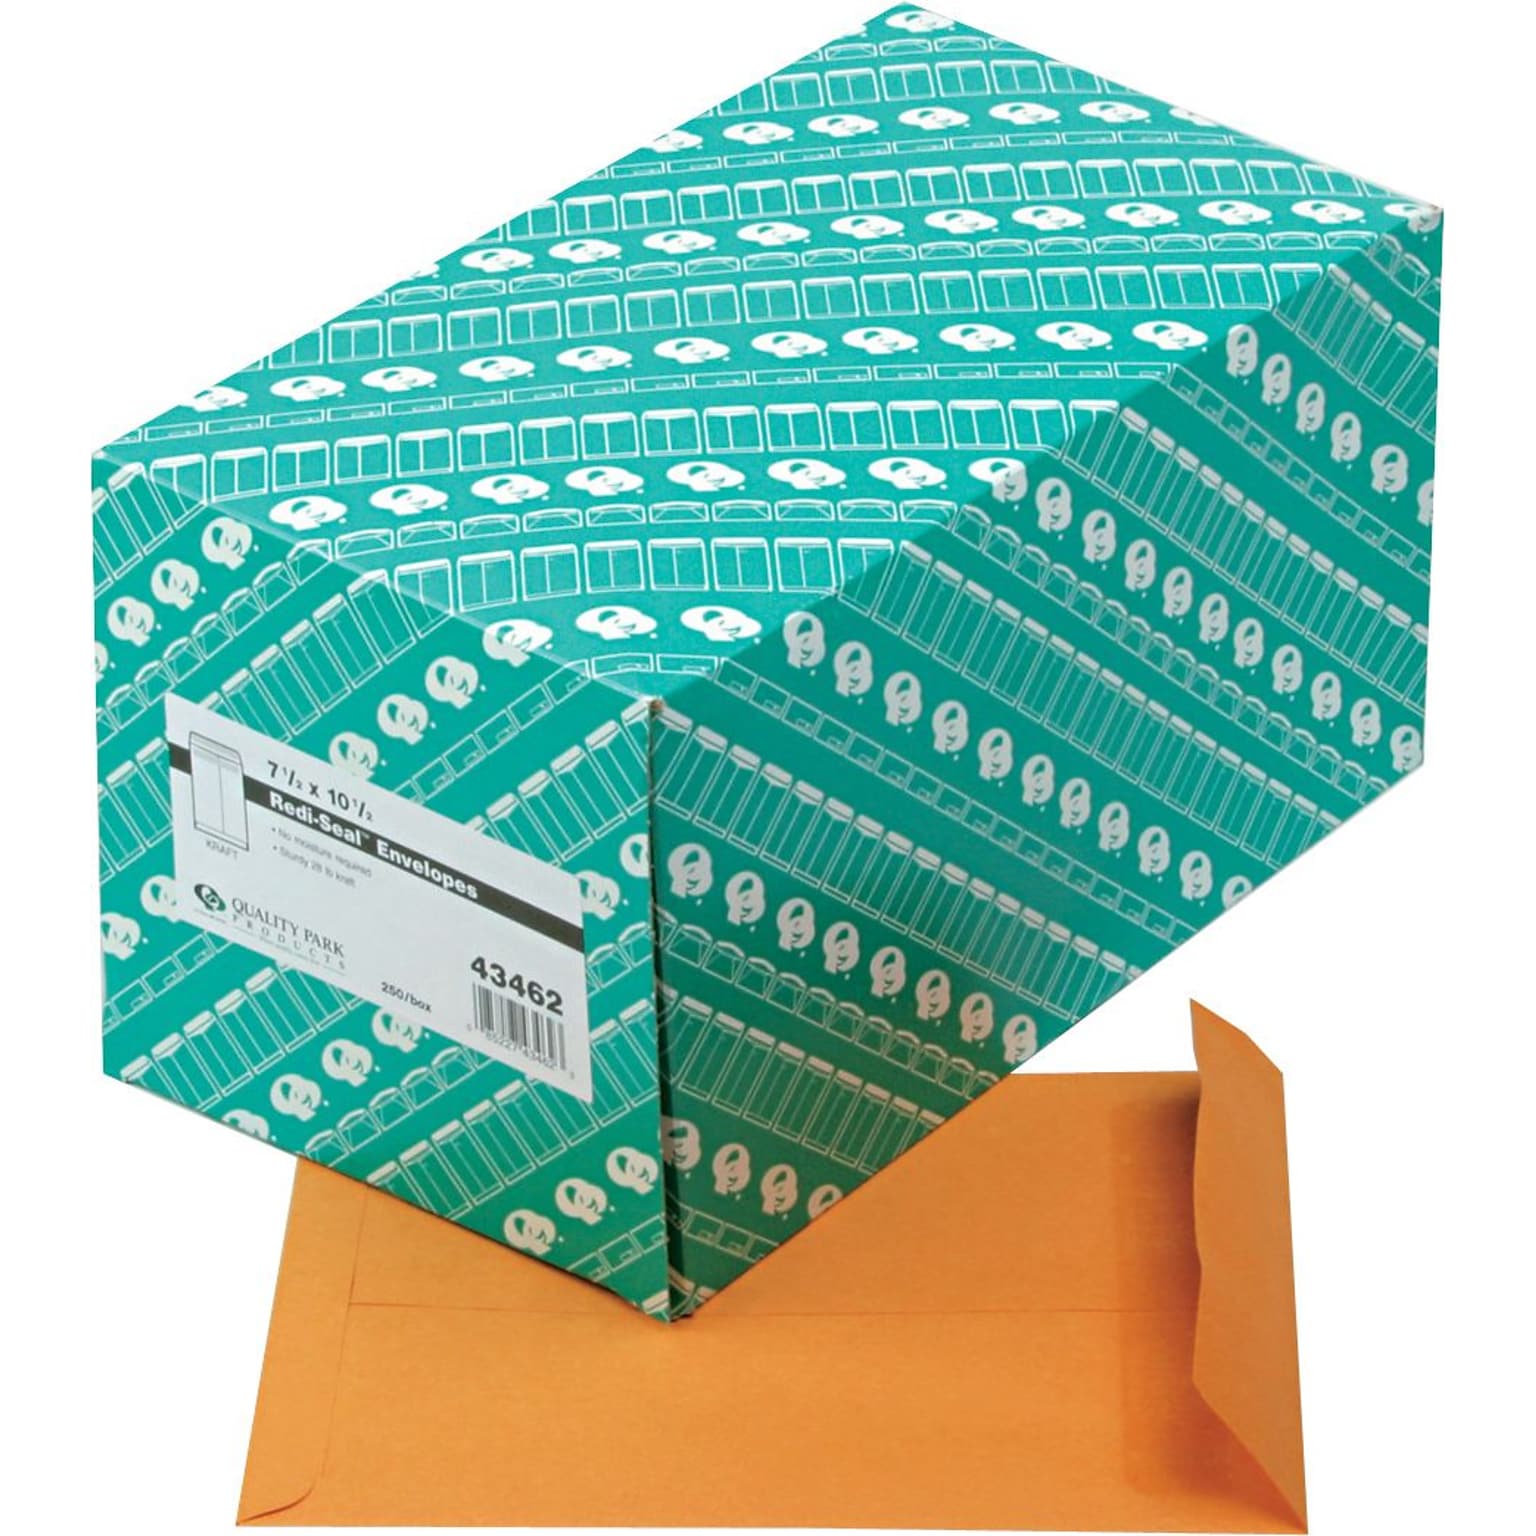 Quality Park Redi-Seal Catalog Envelope, 10 1/2 x 7 1/2, Kraft, 250/Box (43462)